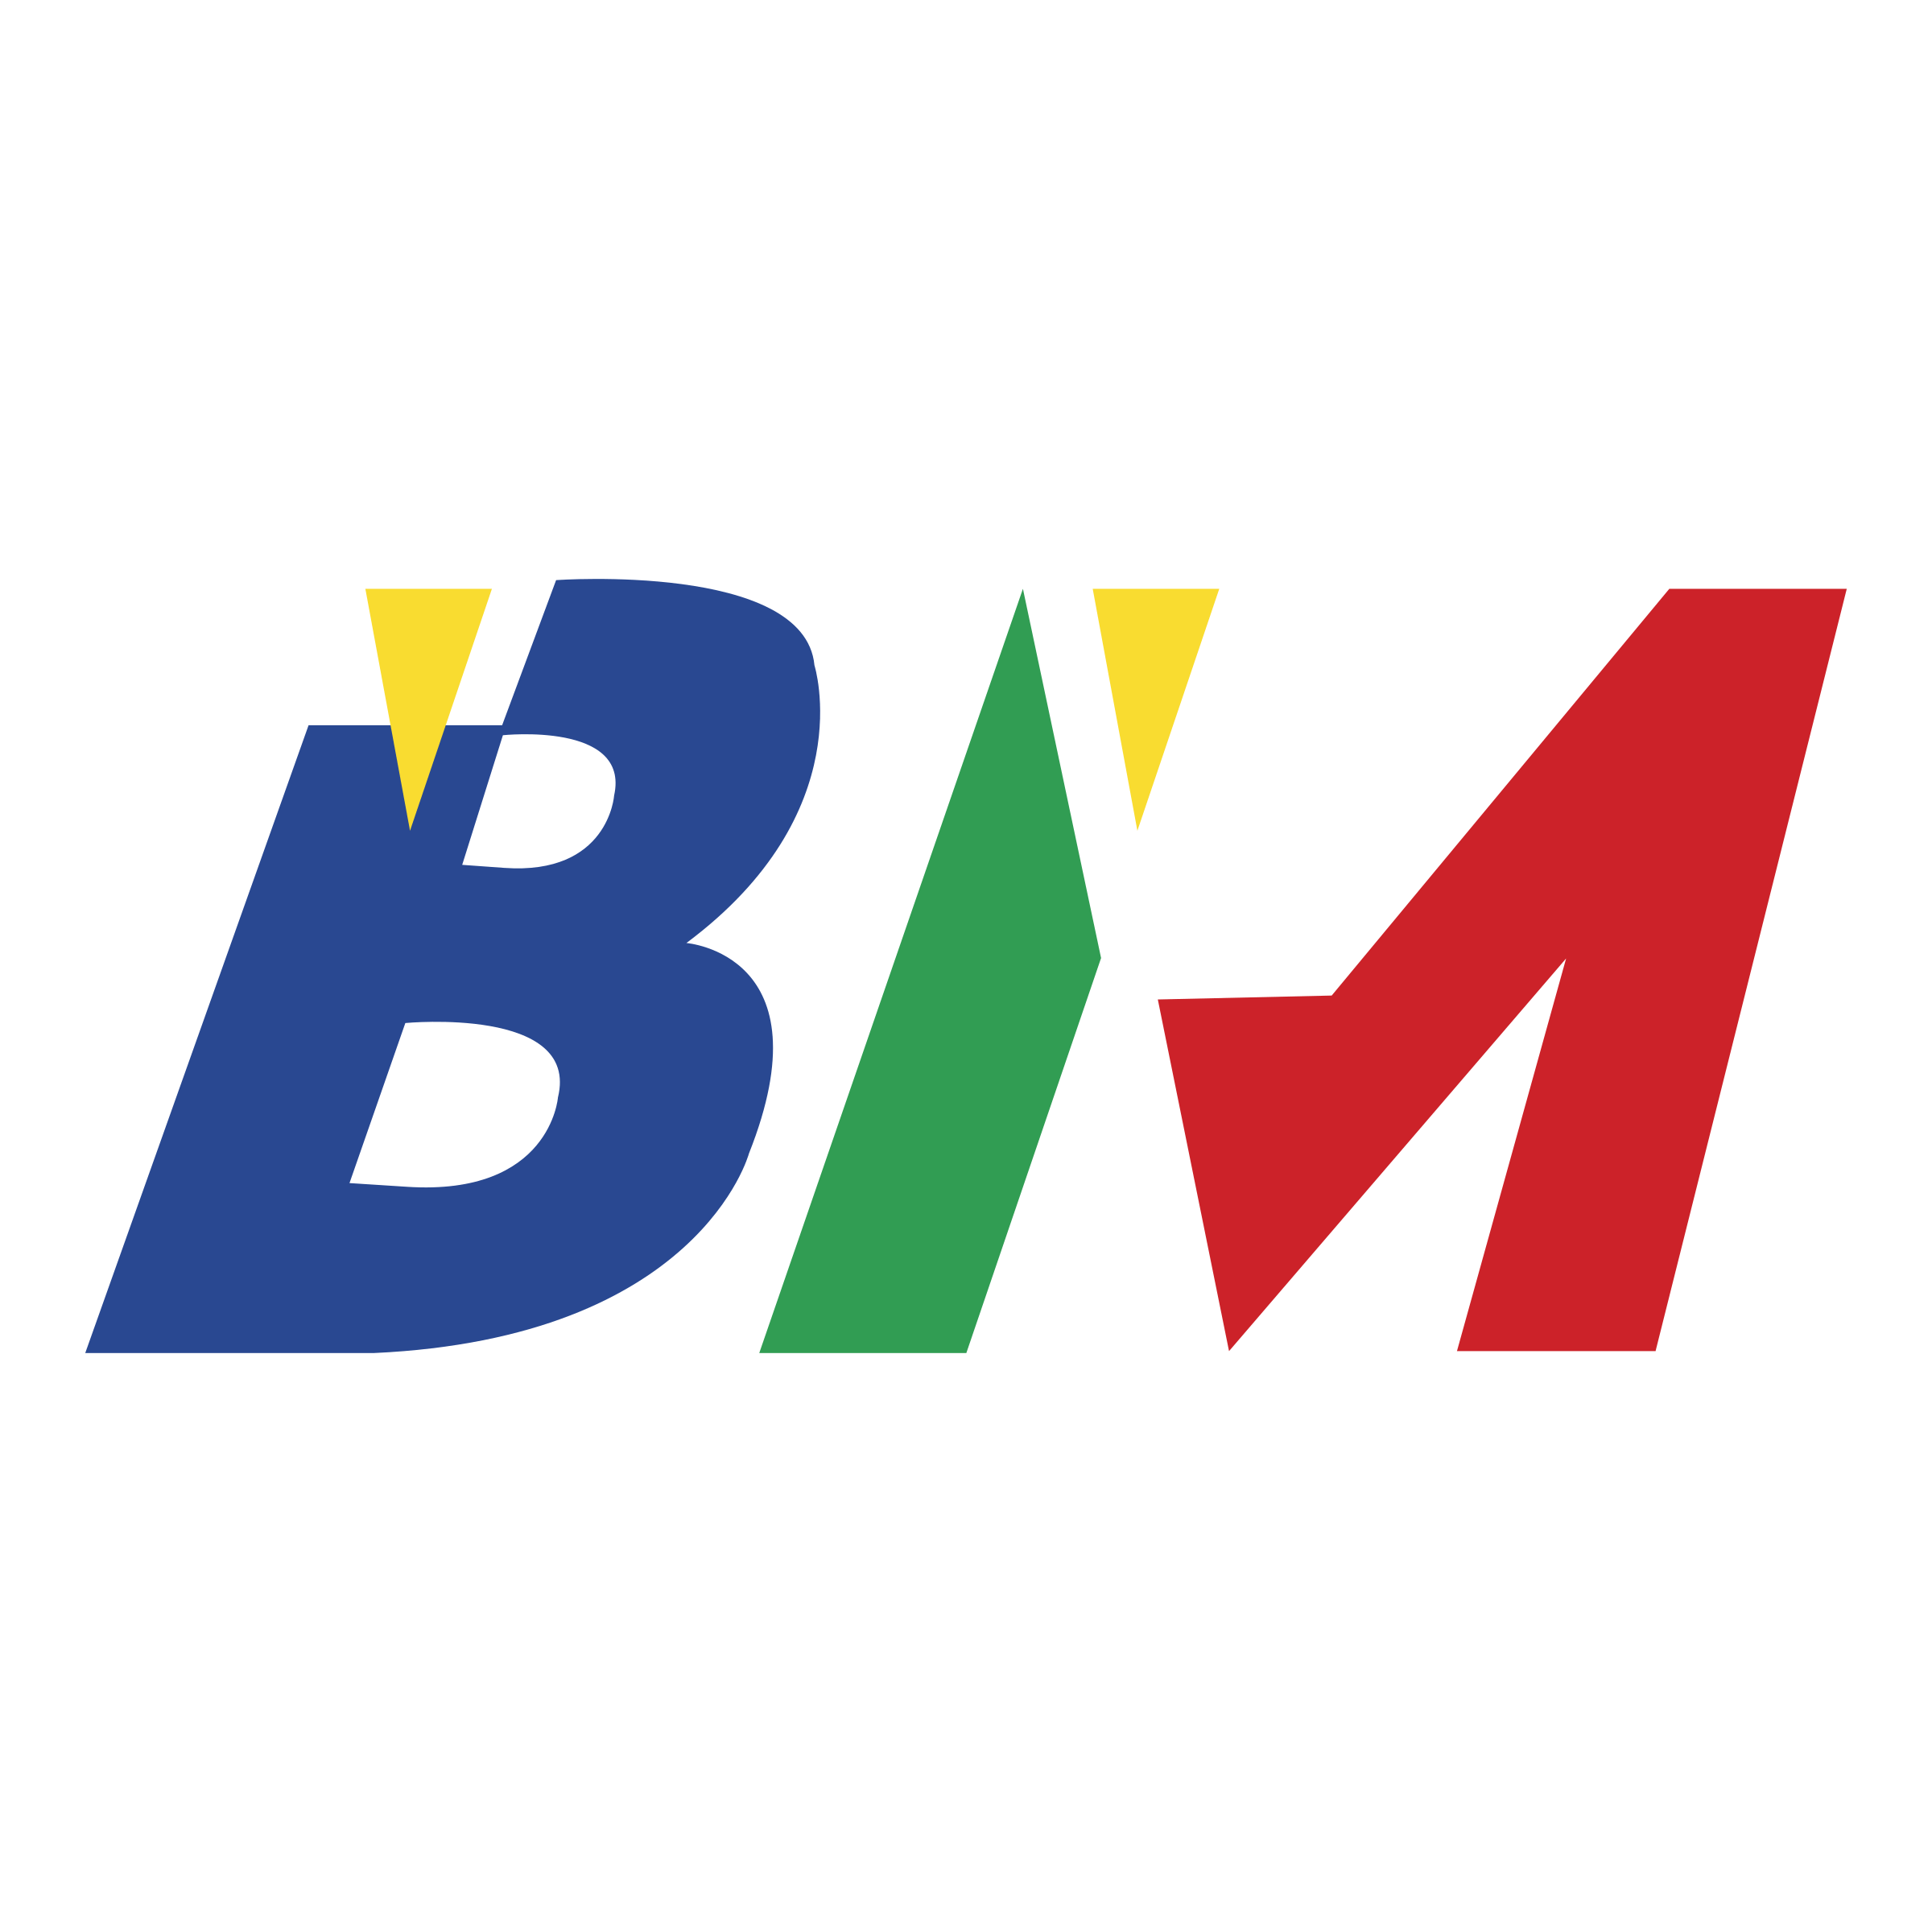 Bim Logo - BIM Logo PNG Transparent & SVG Vector - Freebie Supply